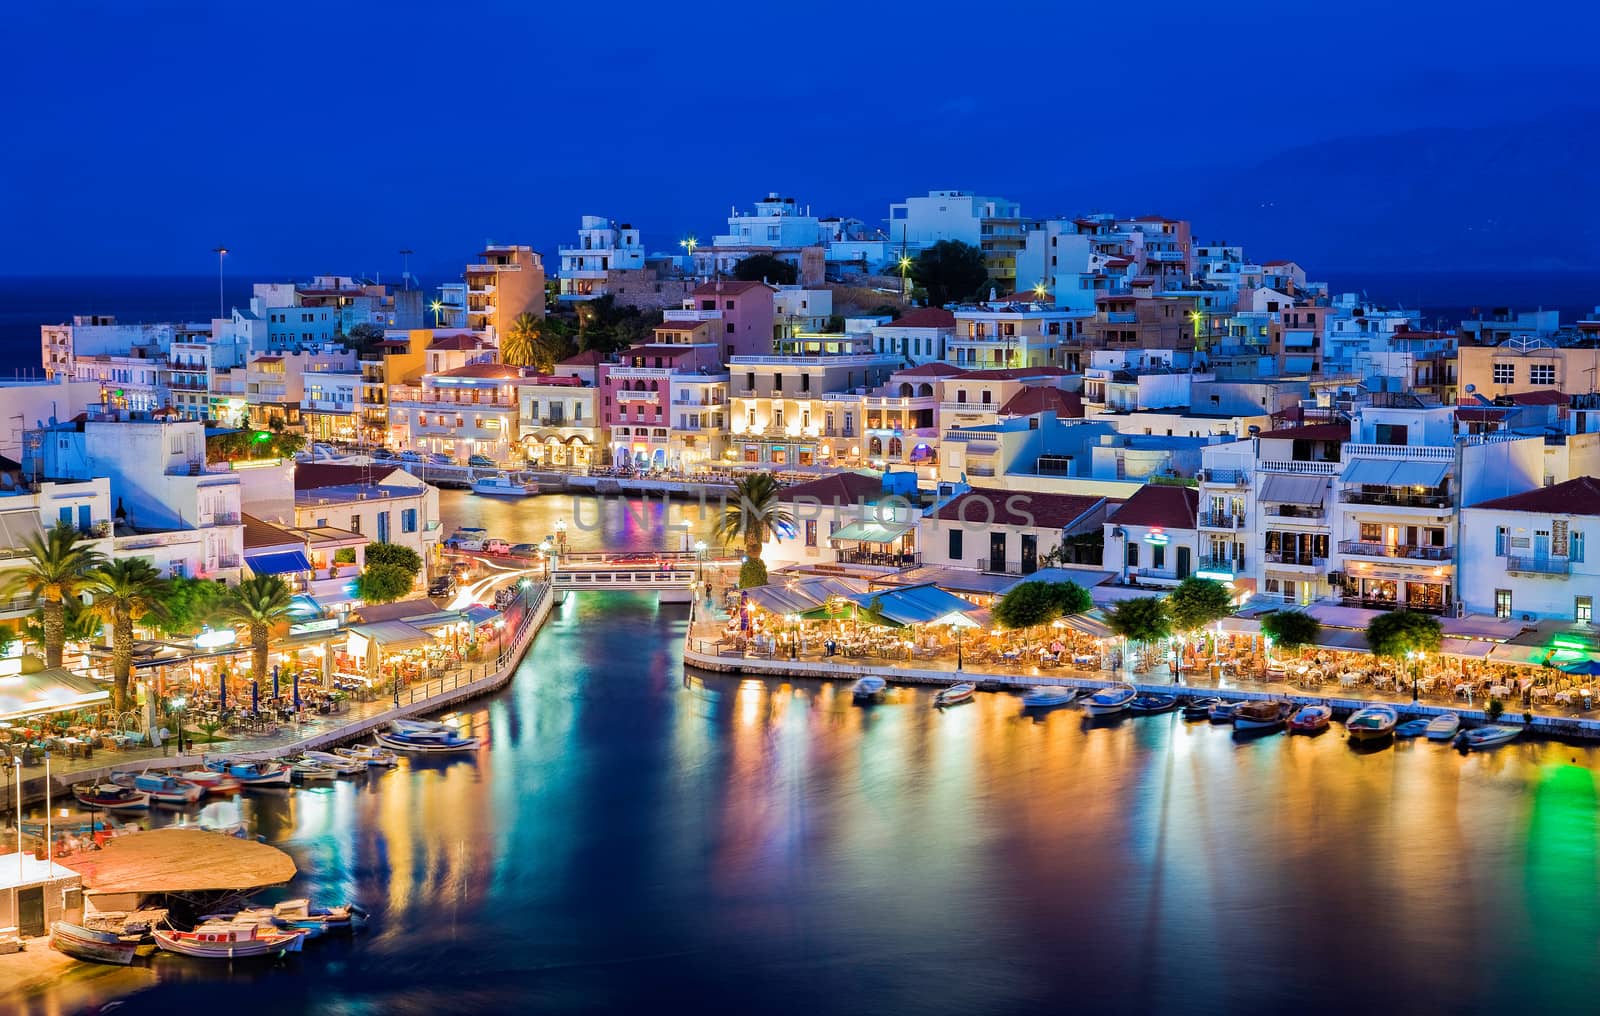  Agios Nikolaos, Crete, Greece by vladimir_sklyarov